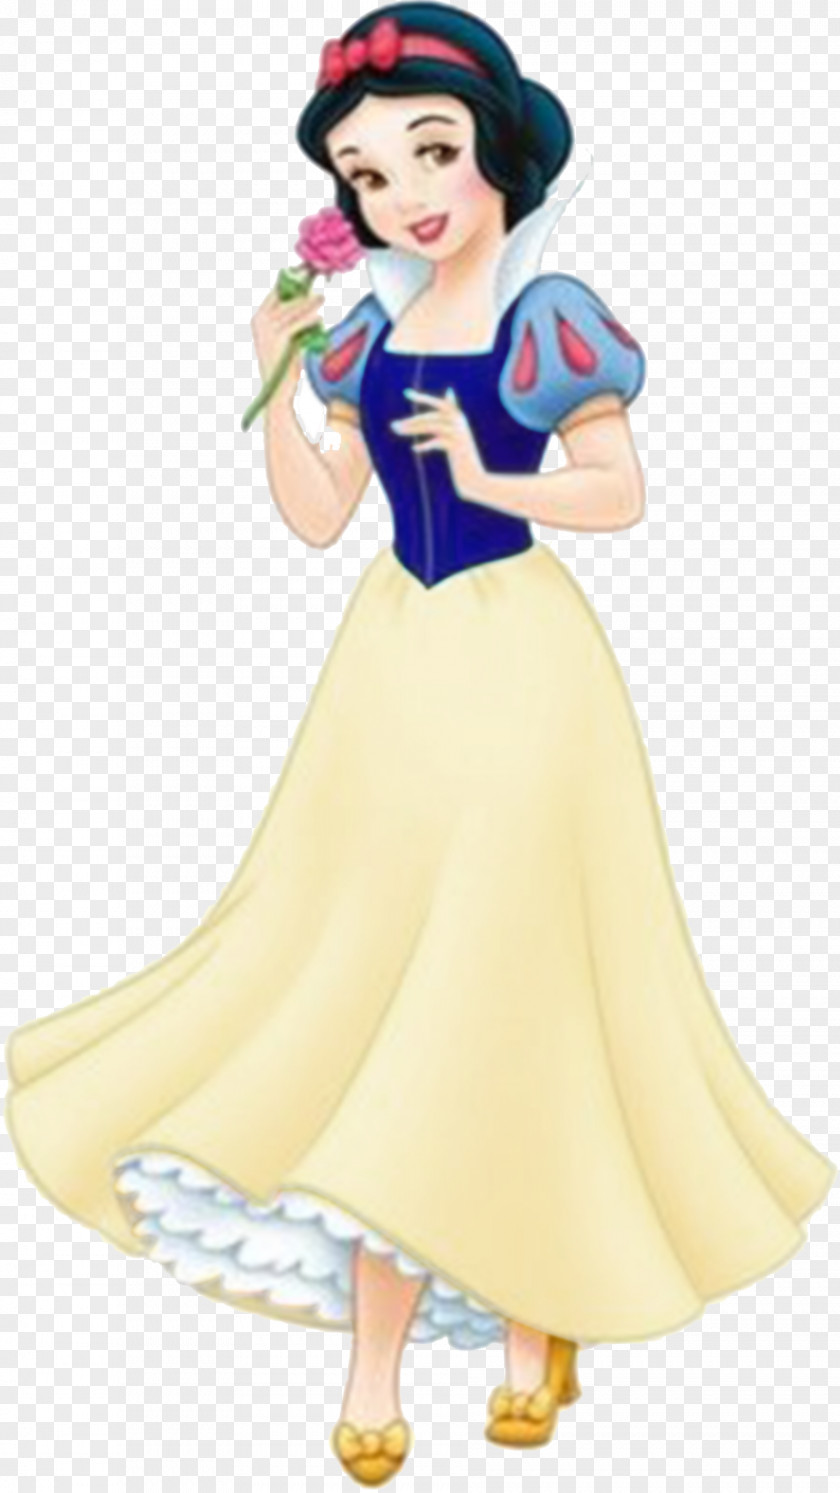 Snow White Clipart And The Seven Dwarfs Rapunzel Cinderella Ariel PNG